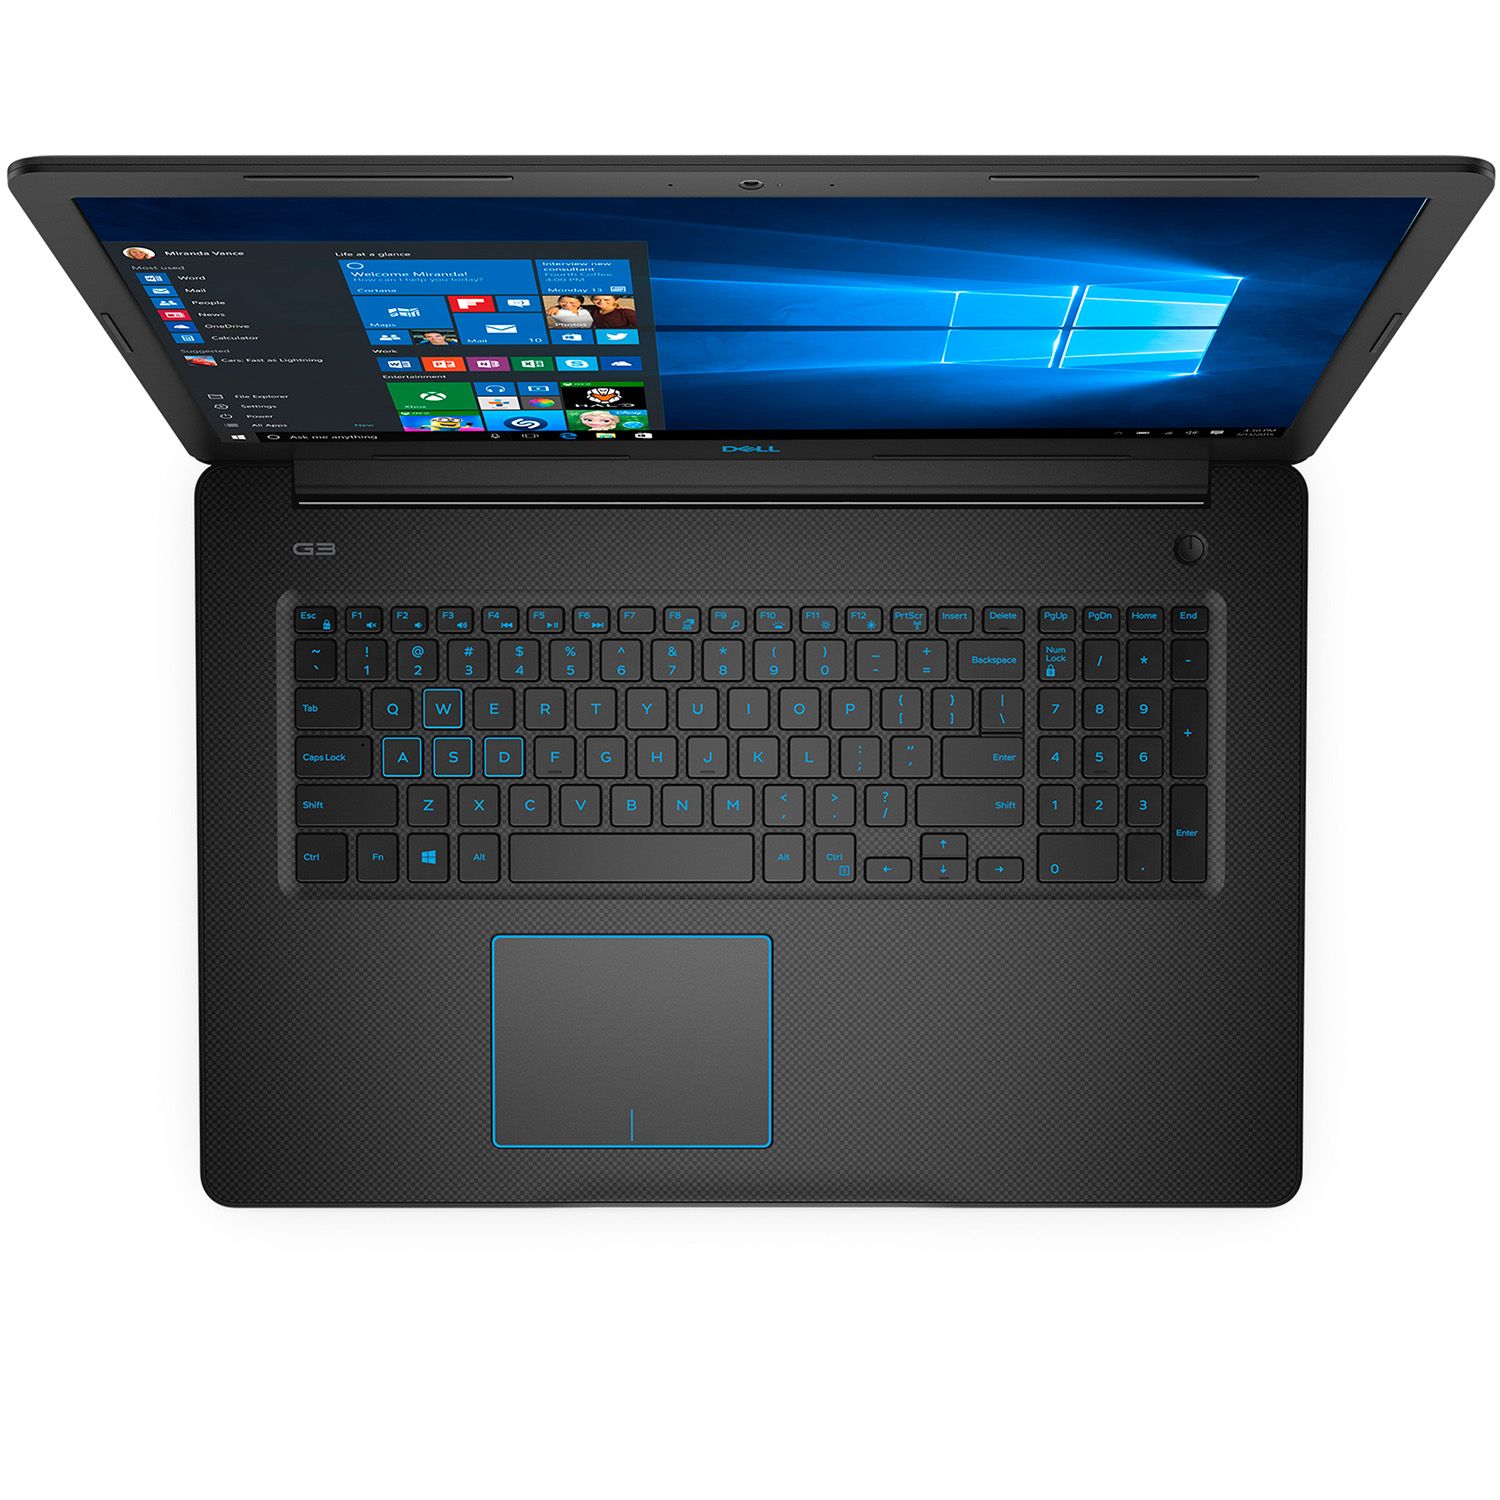 Dell 5000 Series G3779-7934BLK-PUS 17.3″ Gaming Laptop, 8th Gen Core i7, 8GB RAM, 1TB + 128GB SSD